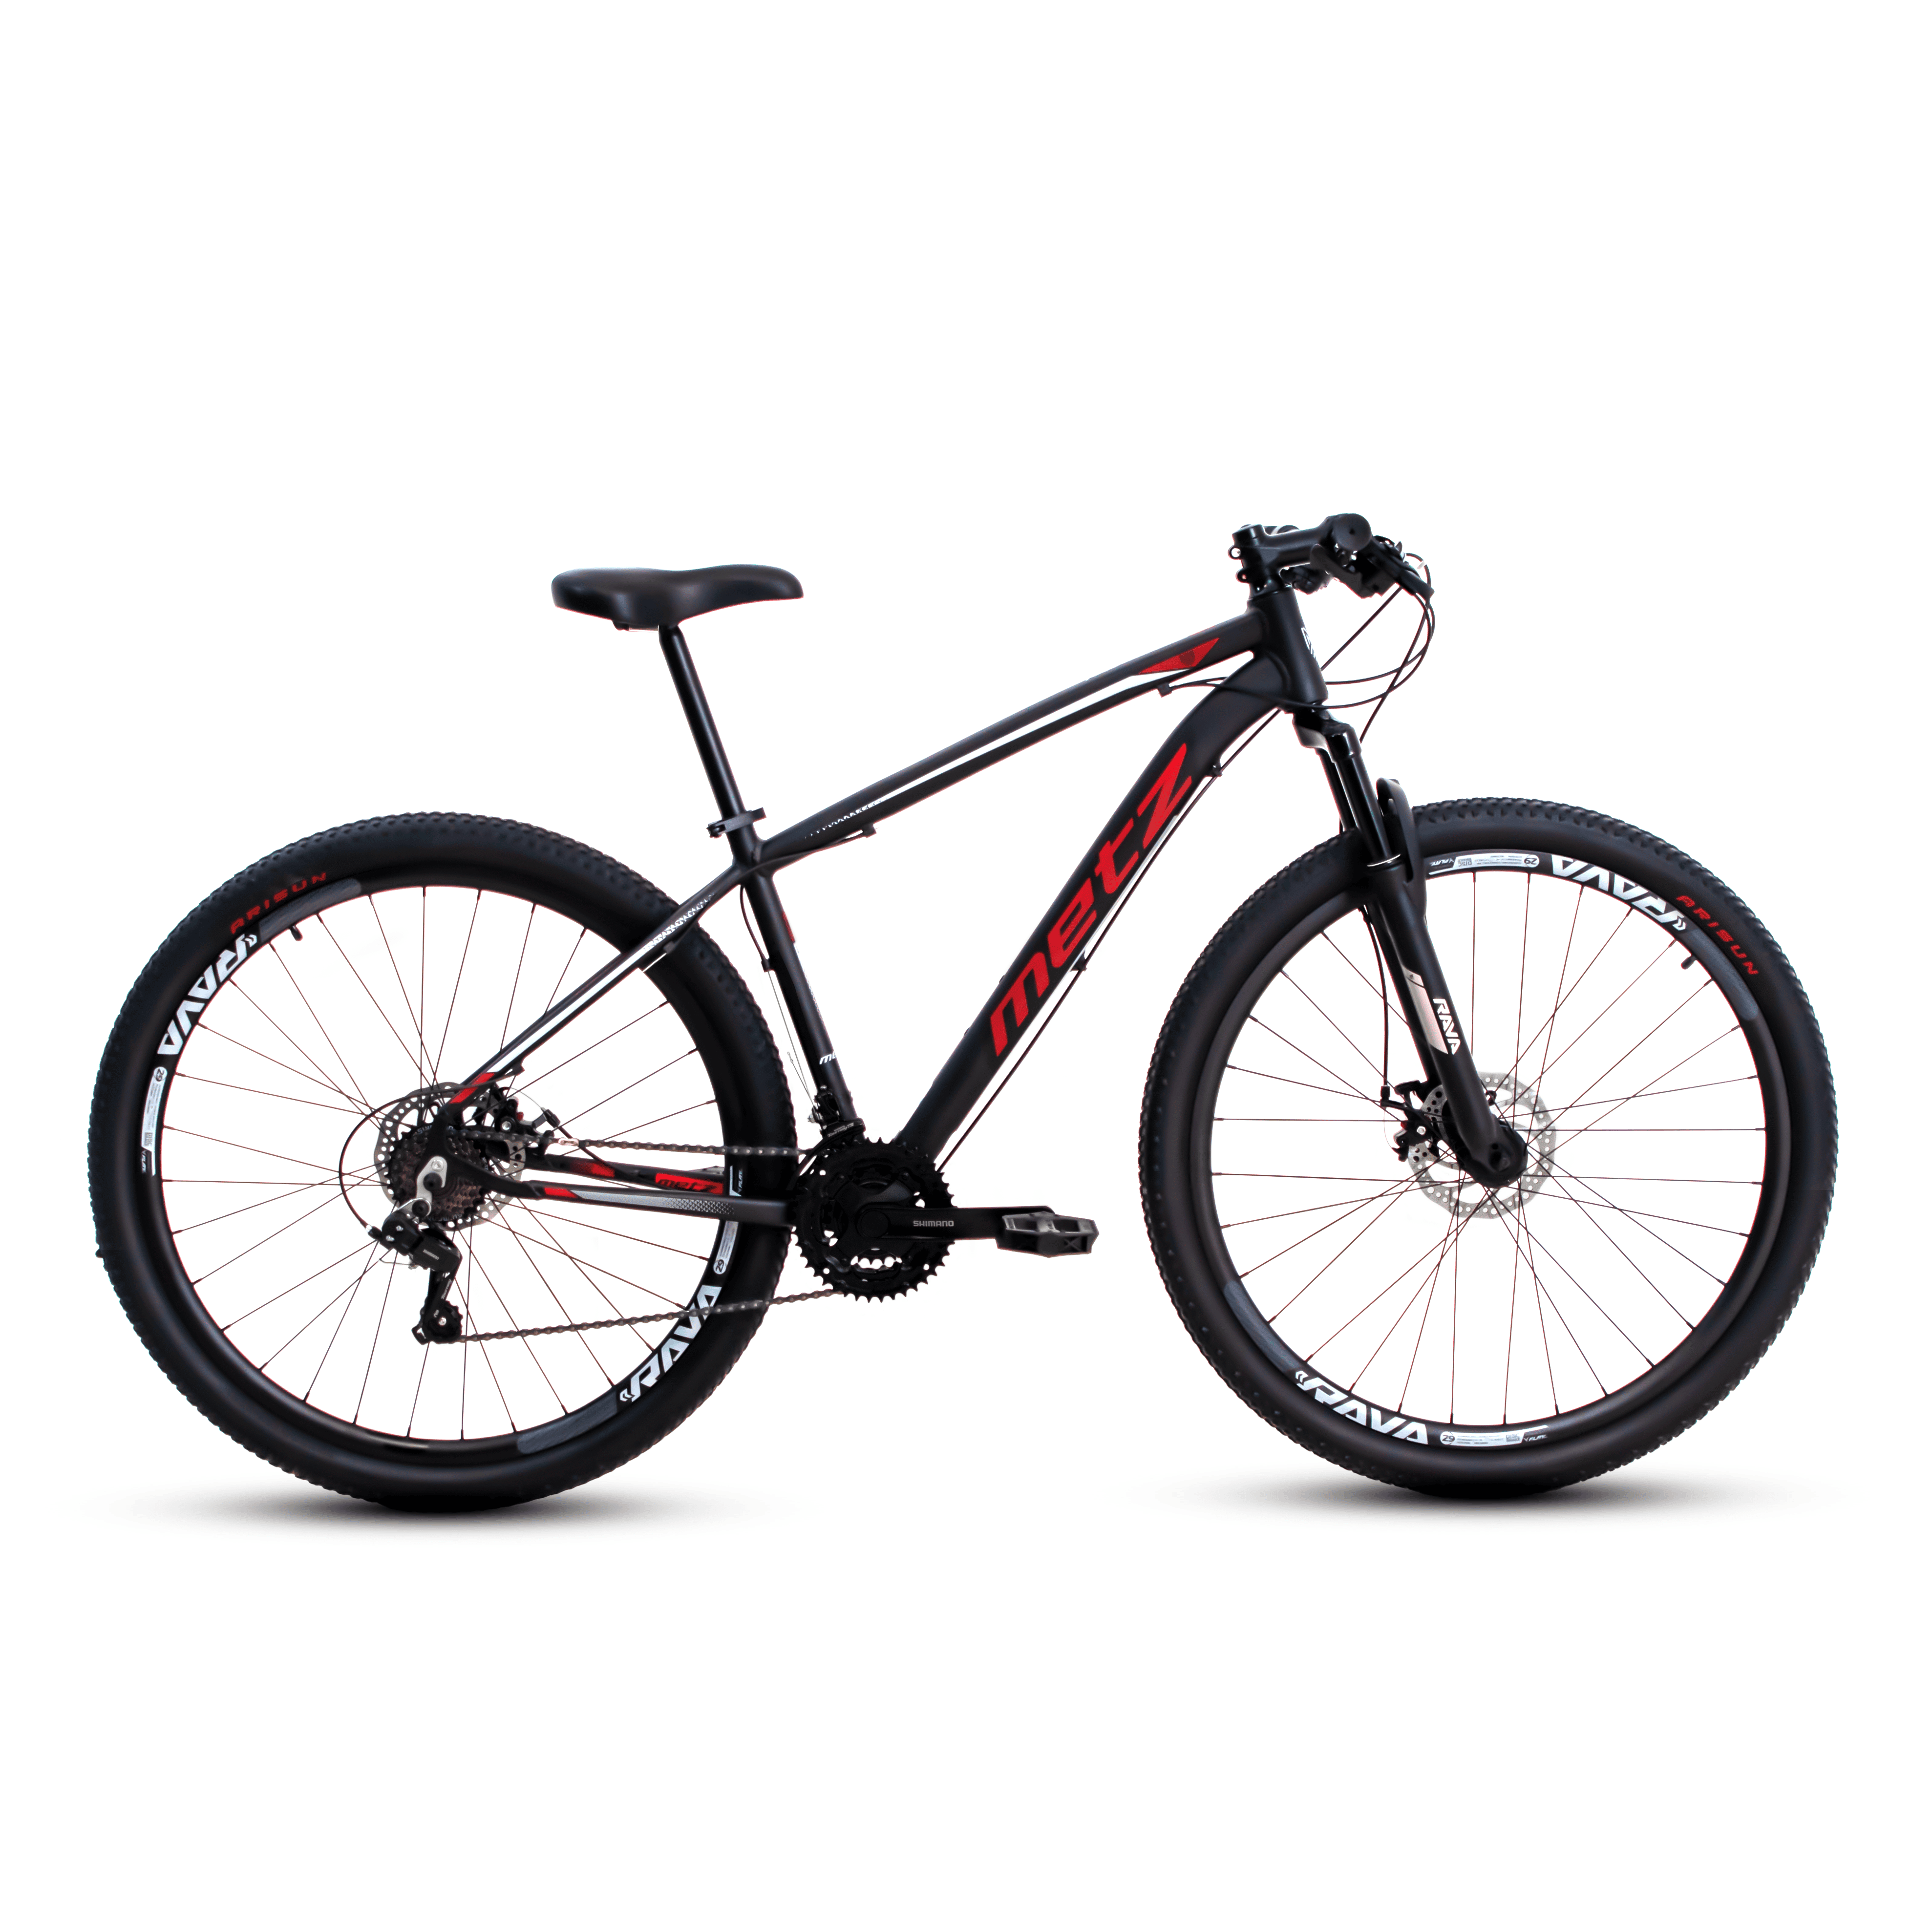 Bicicleta Metz Fuse Plus | 21V - Preto/Vermelho, 17"